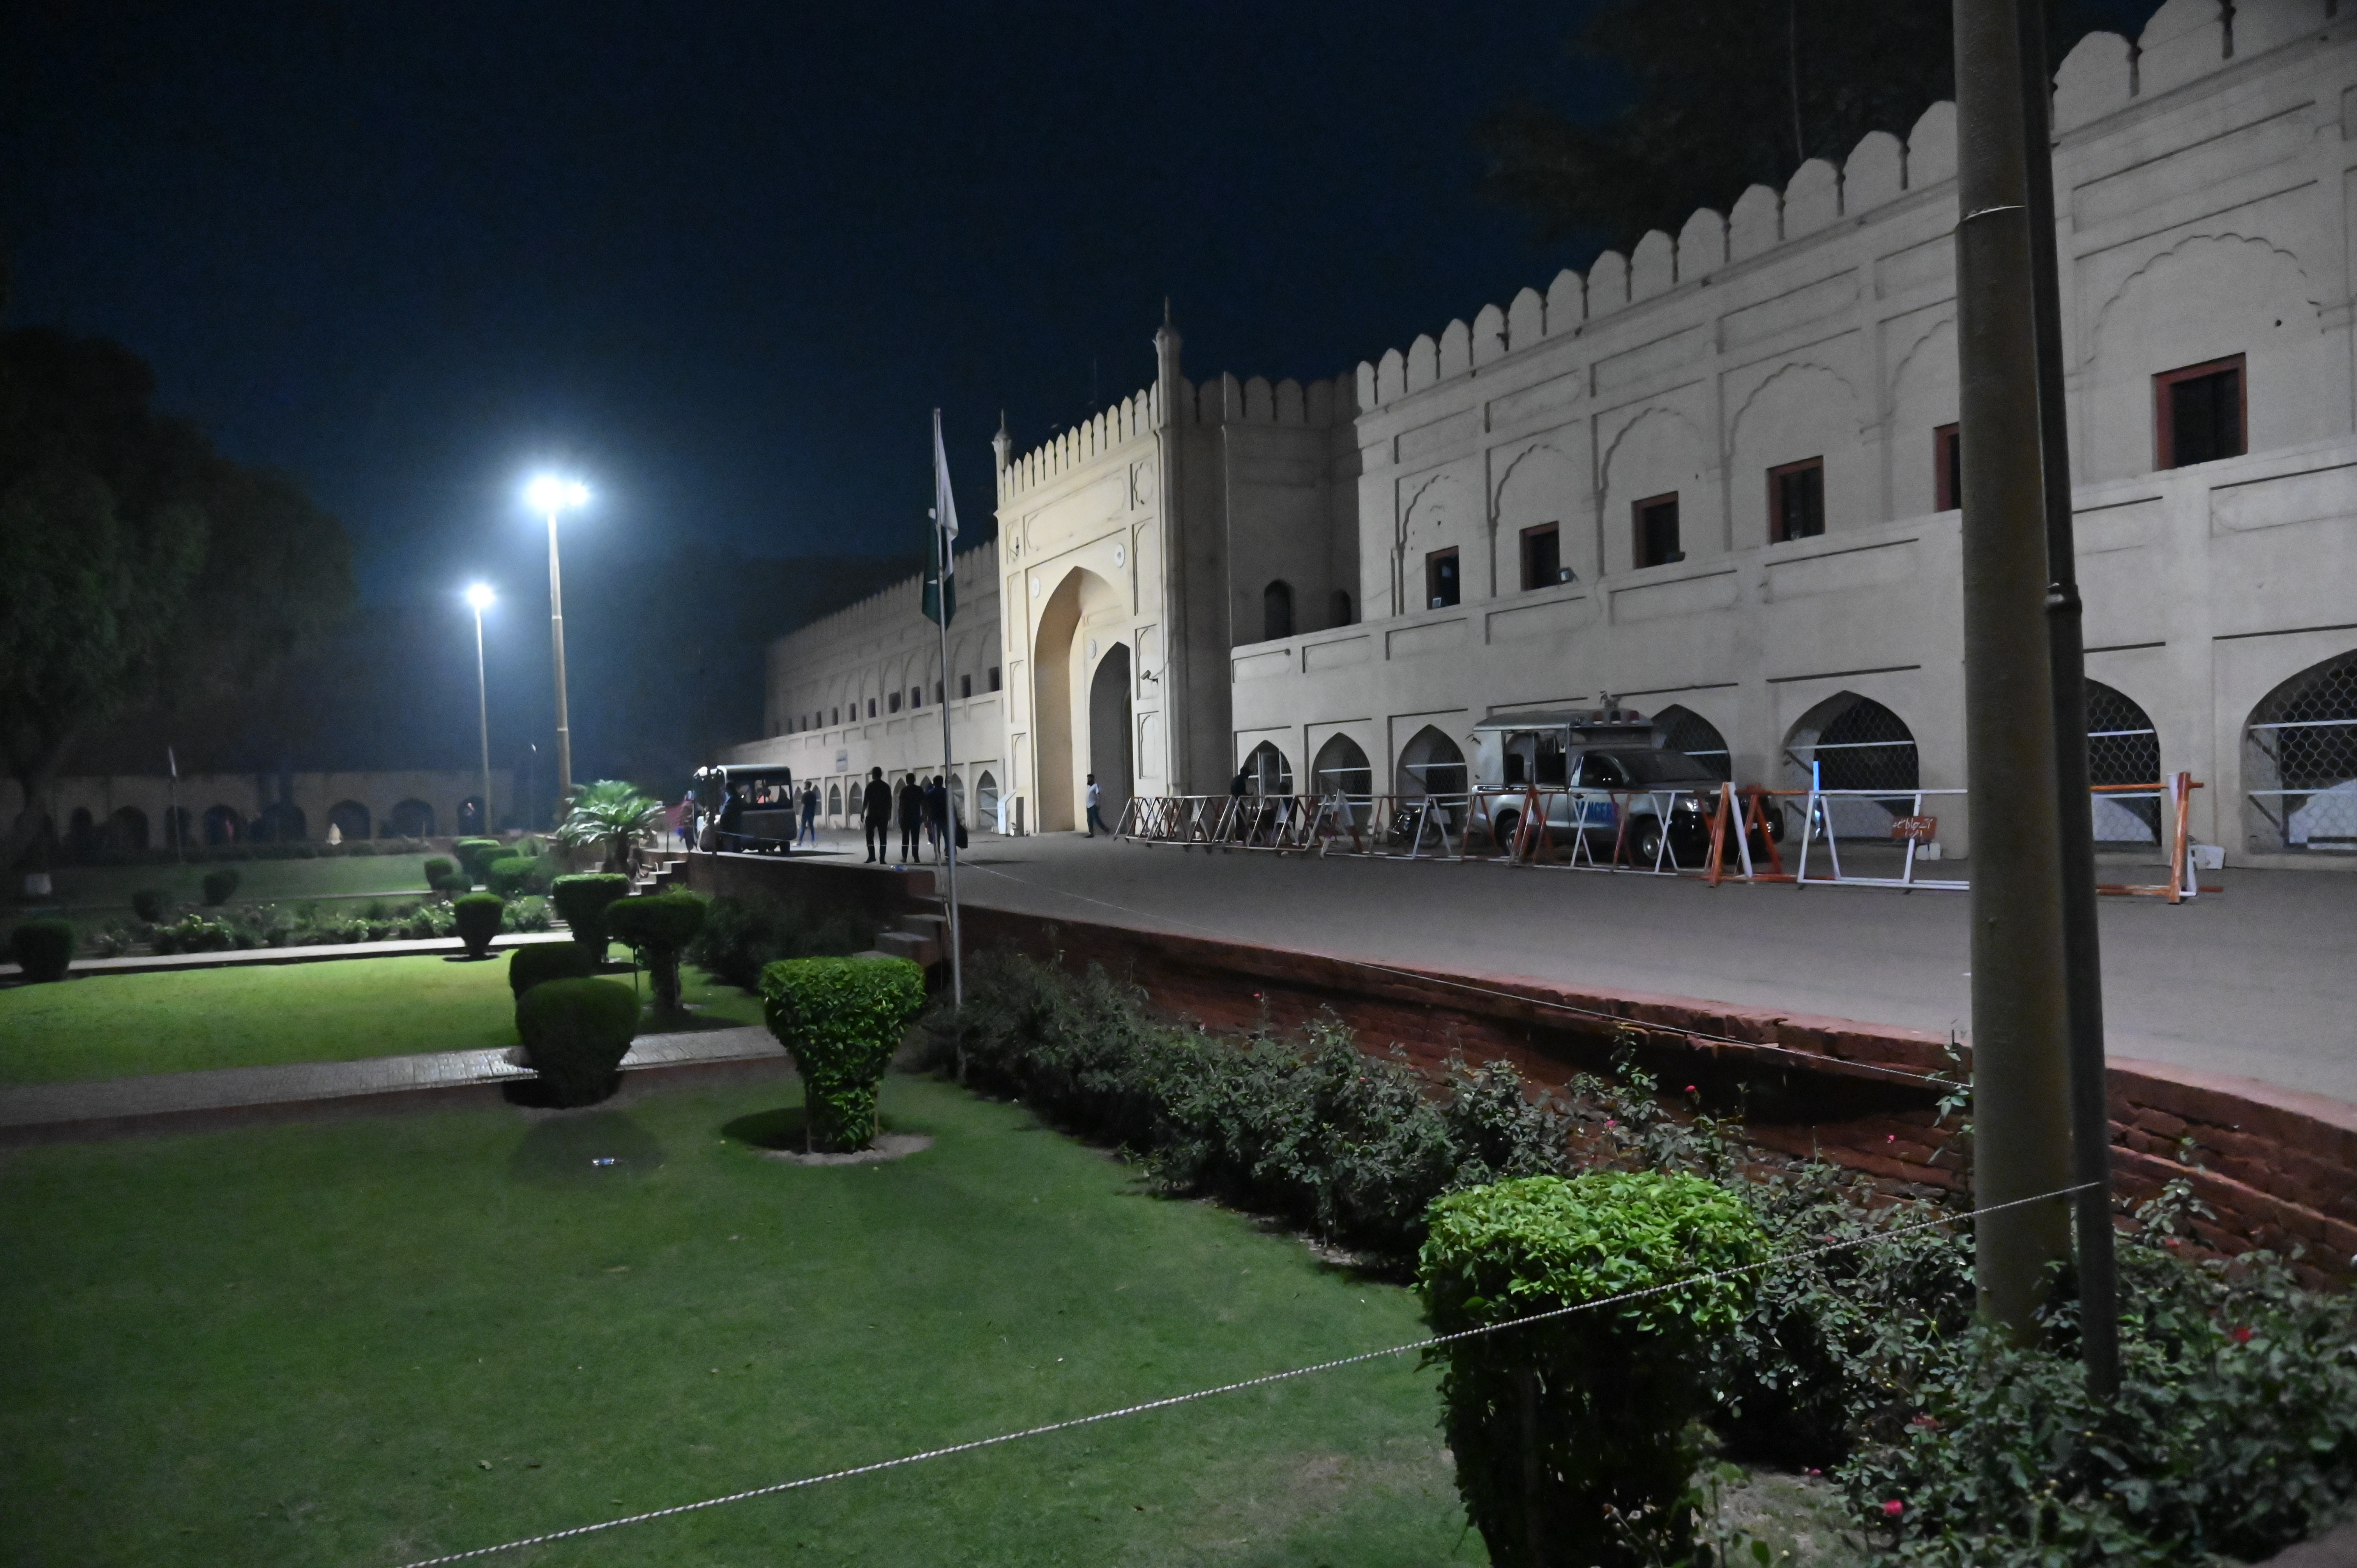 The beautiful night view of tomb of Allama Muhammad Iqbal